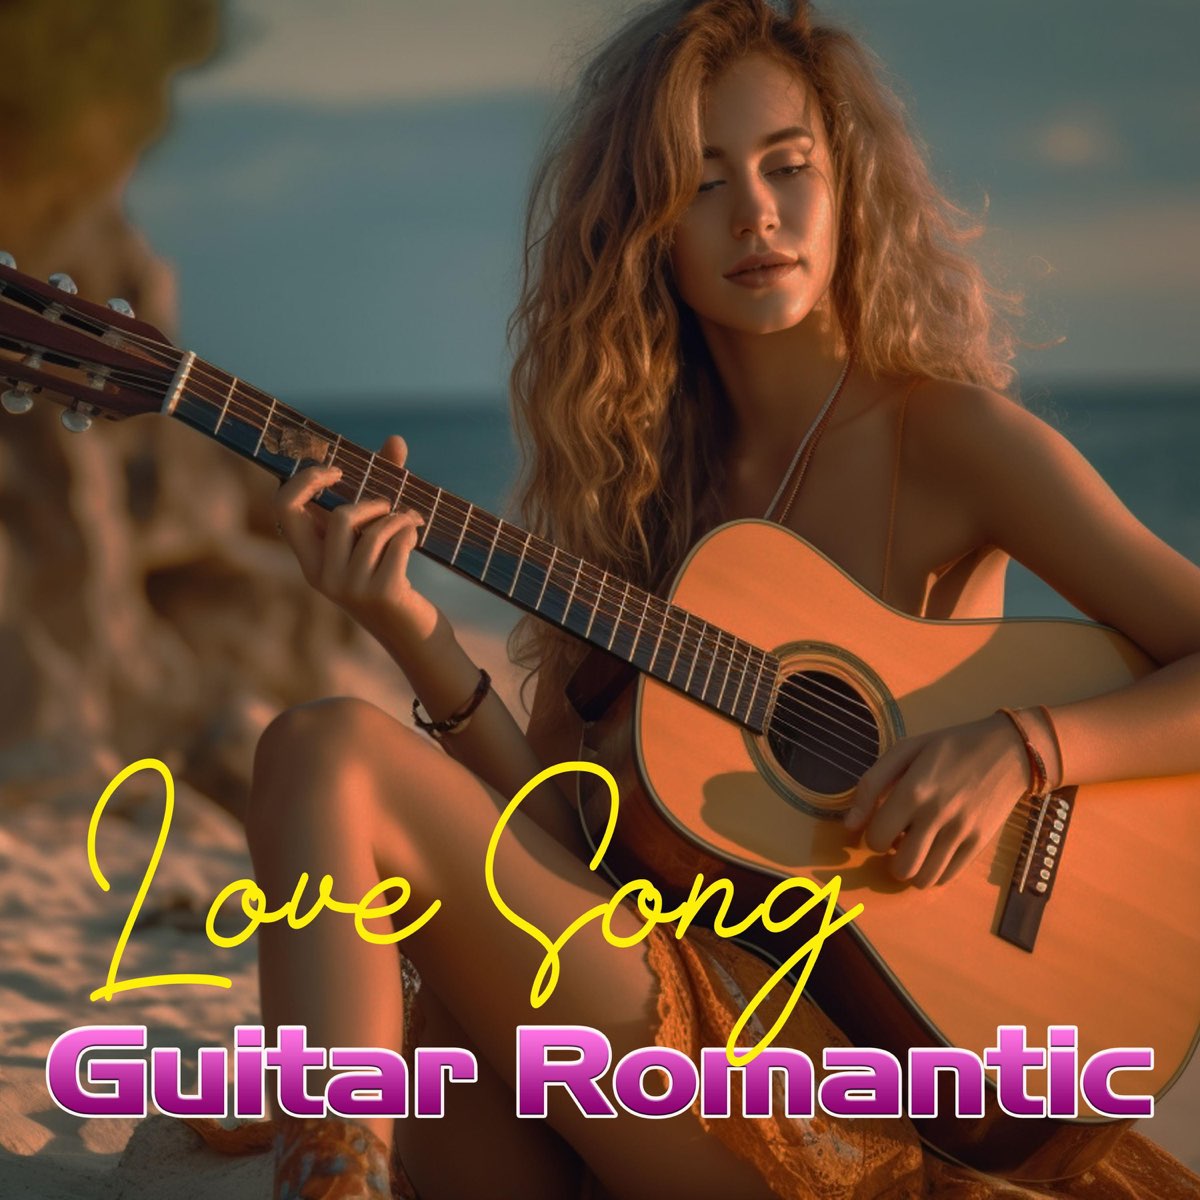 Romantic Classical Guitar Love Songs par Kim Yu Na sur Apple Music